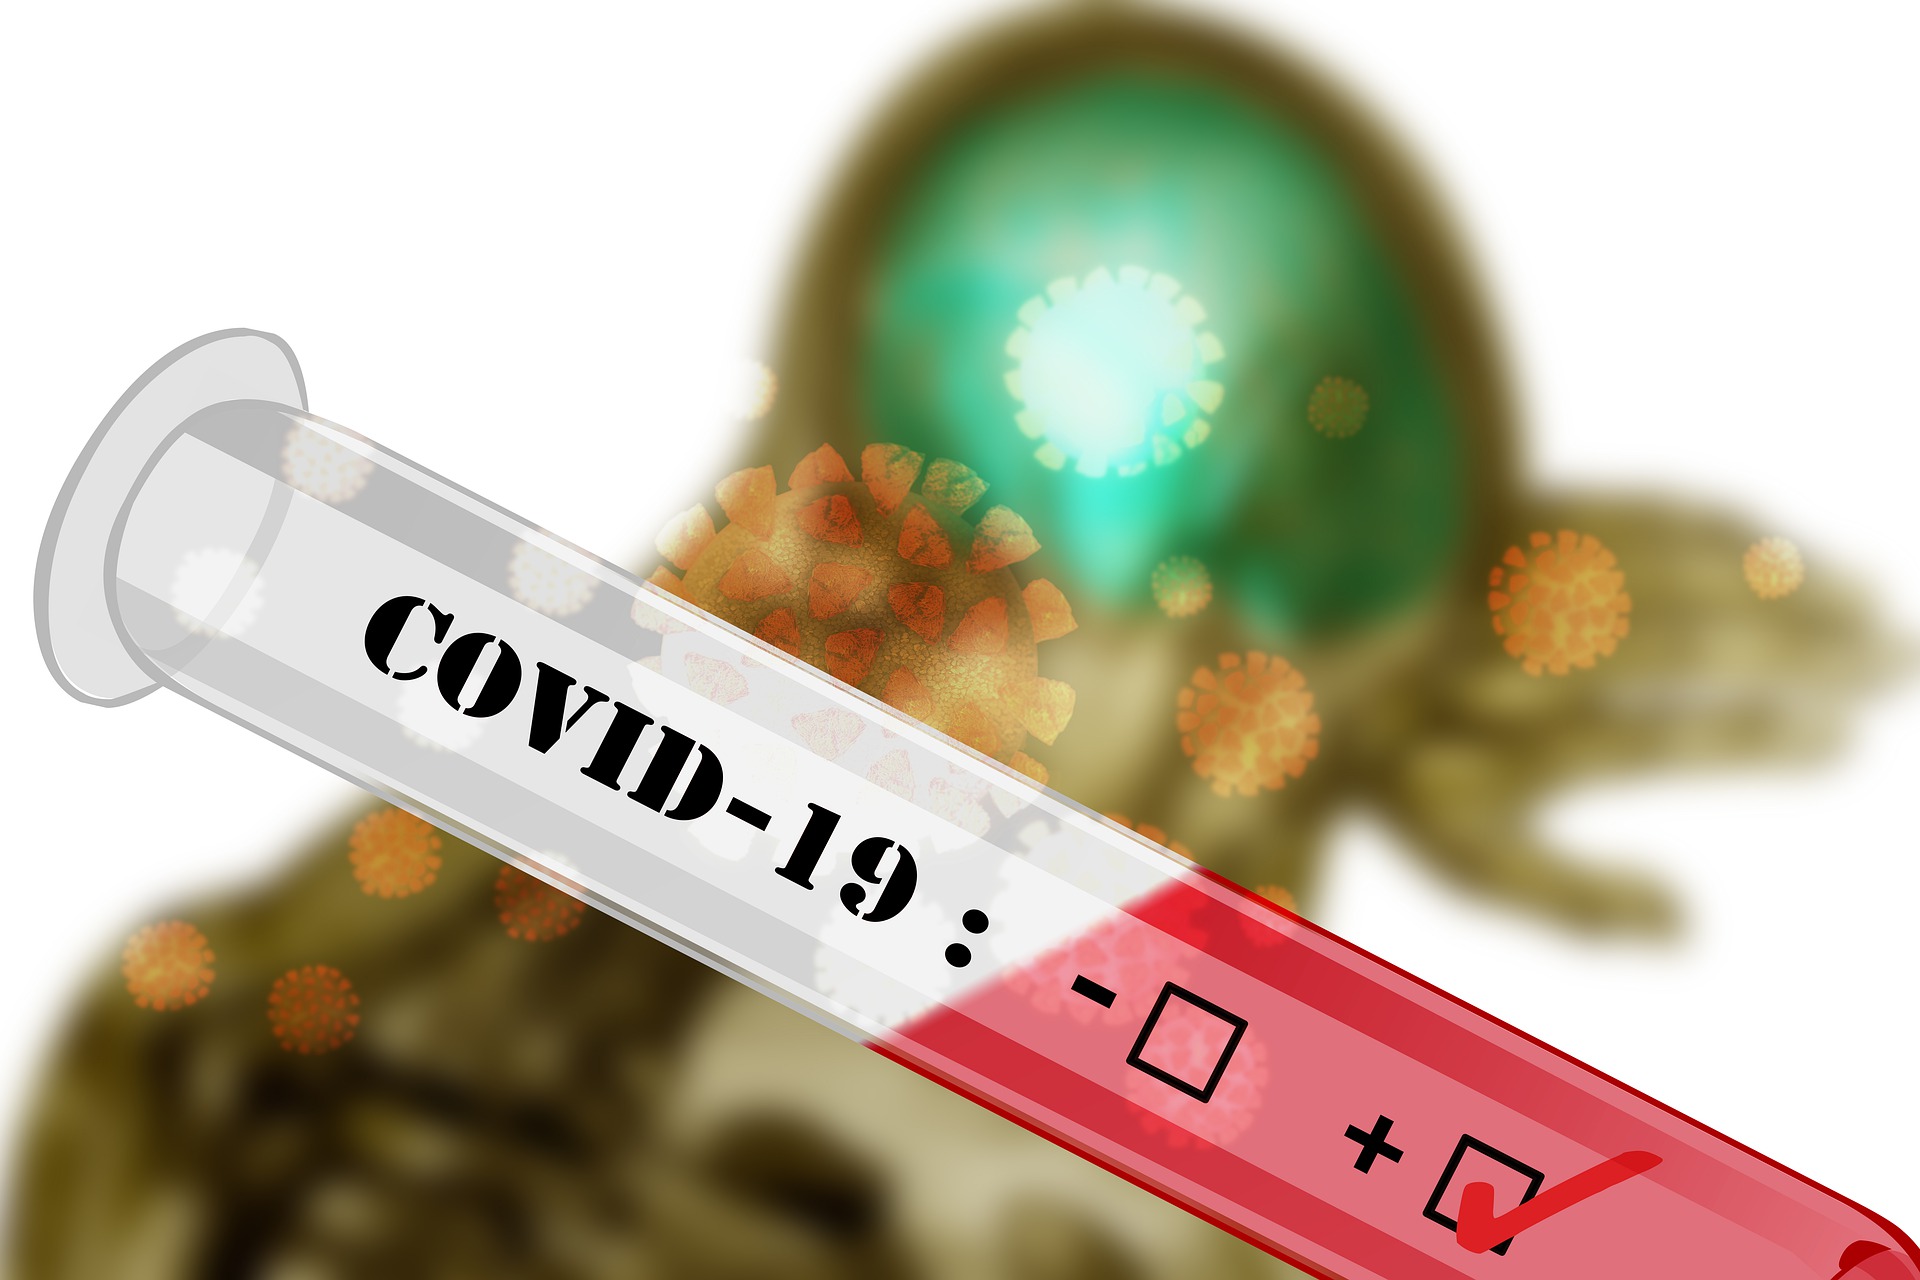 Coronavirus, in Toscana 1.892 nuovi casi, età media 46 anni, 44 decessi